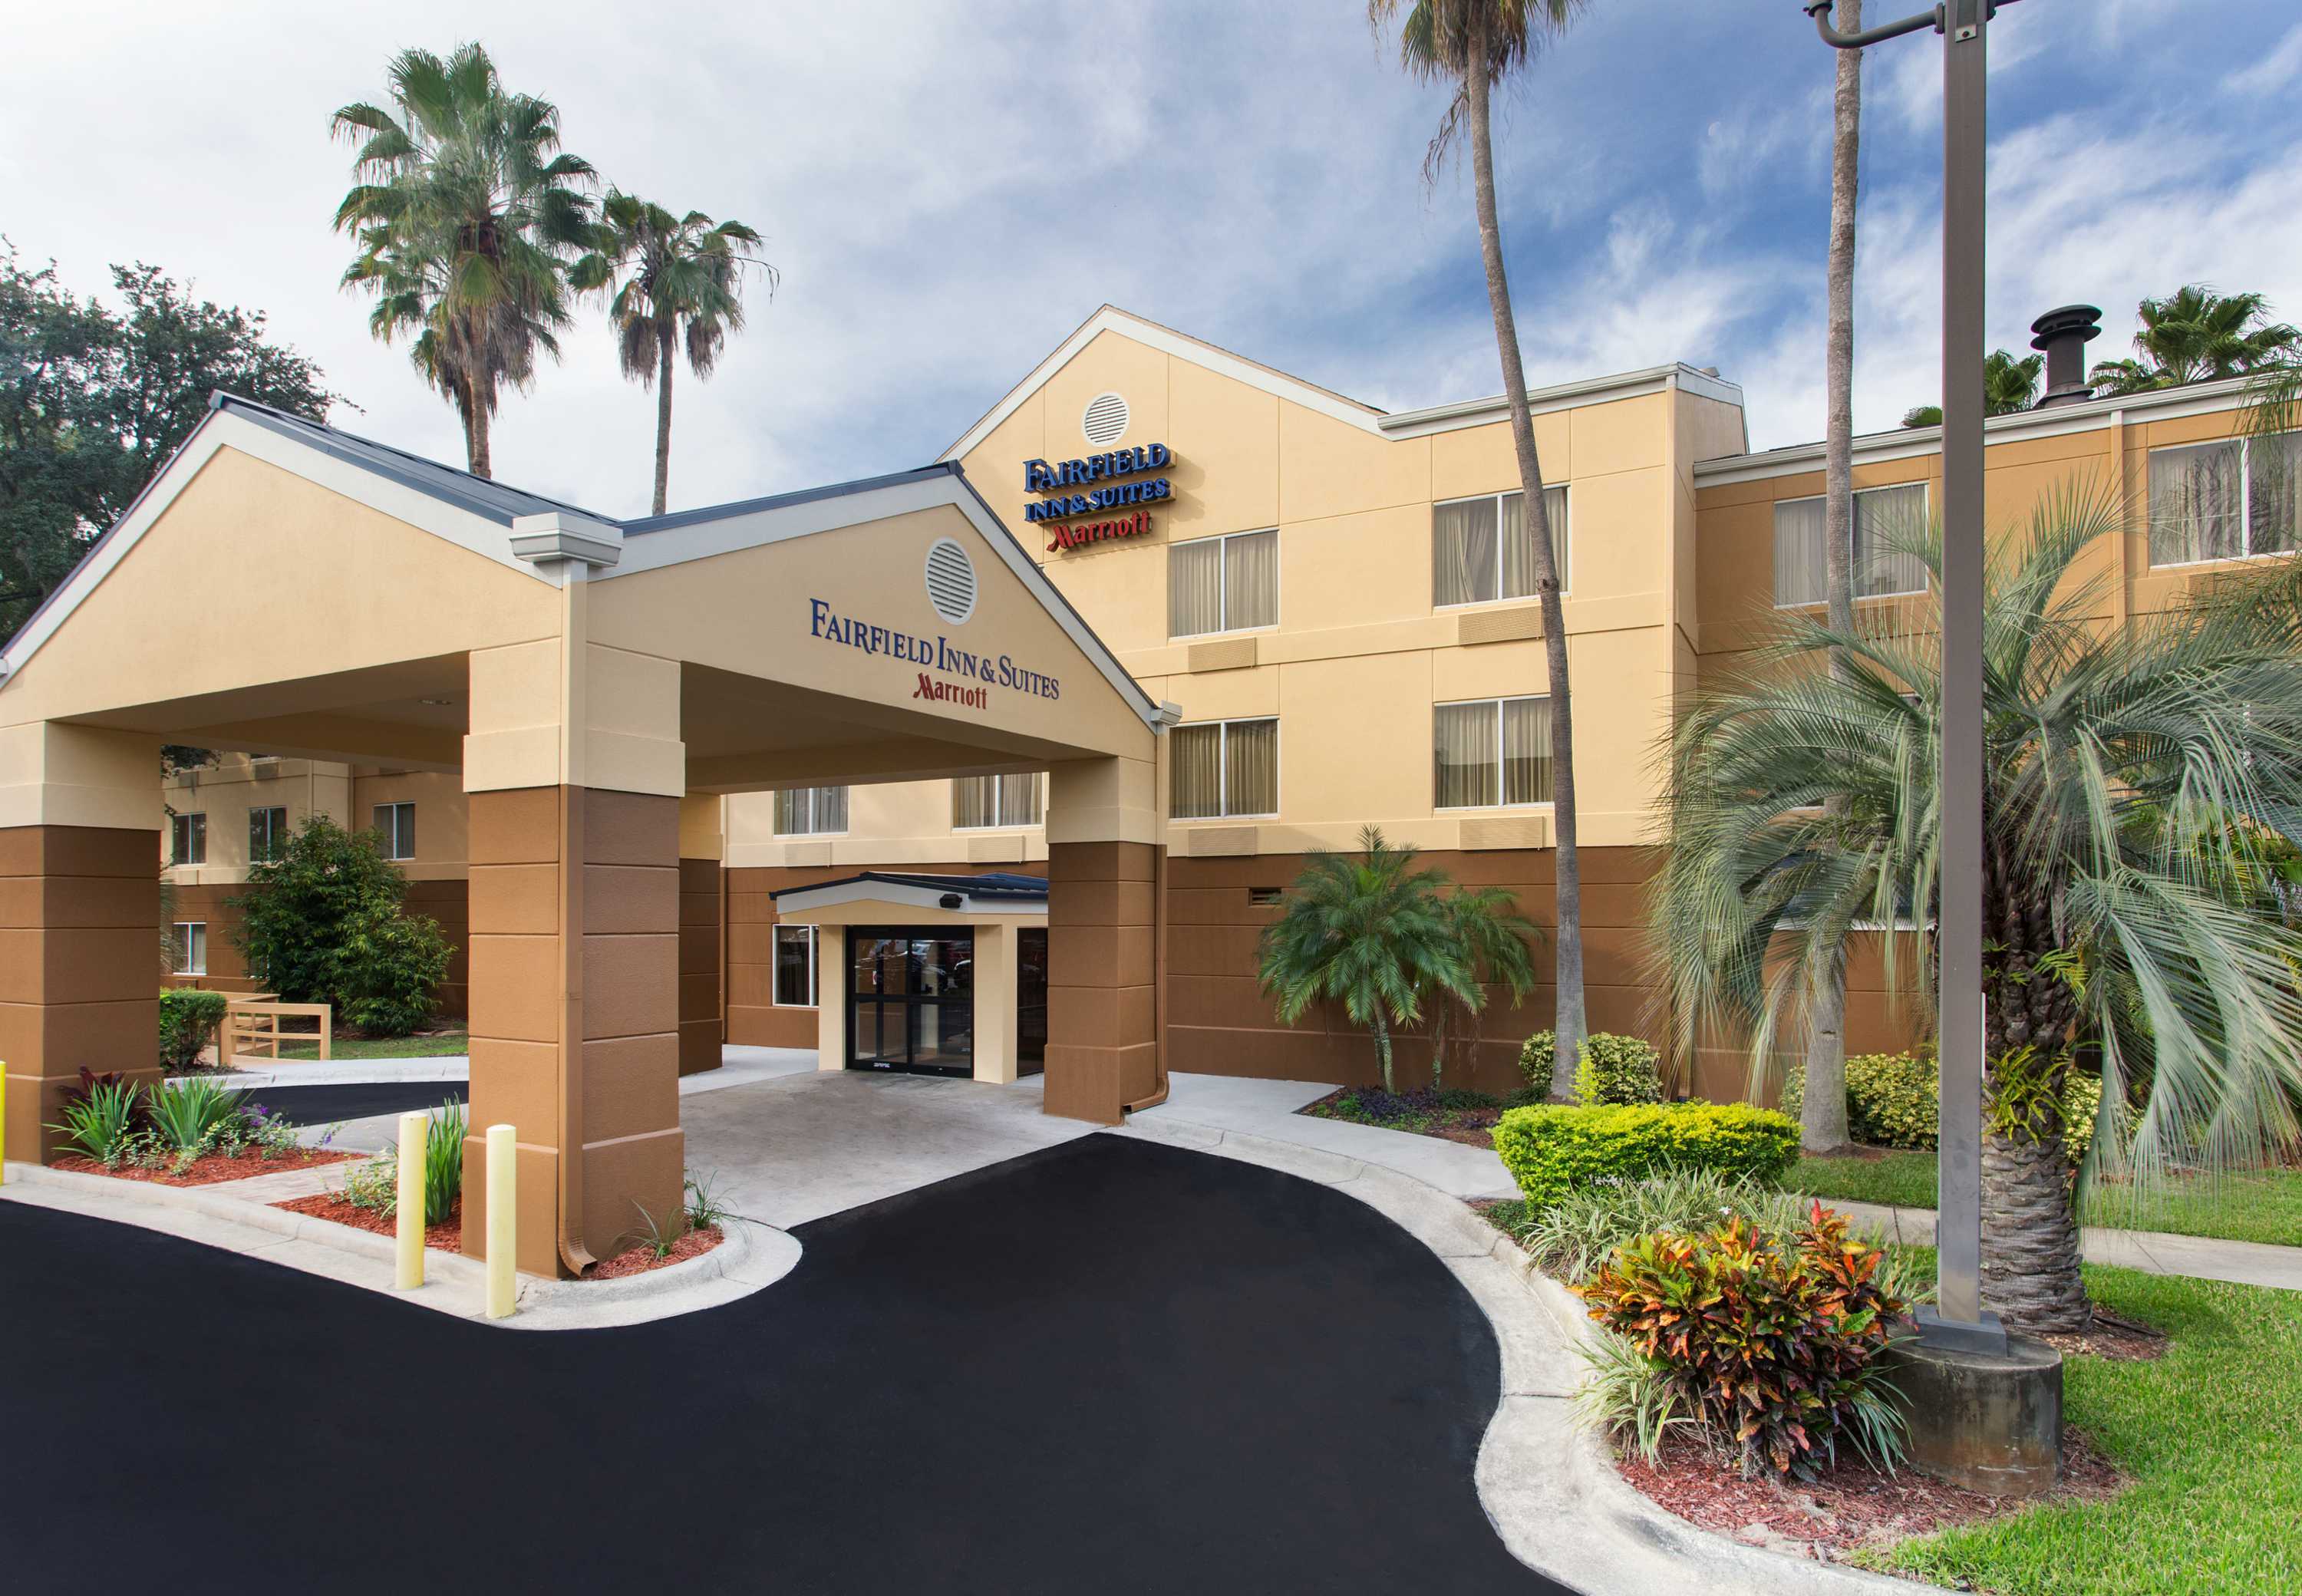 Photo of Fairfield Inn & Suites Tampa Brandon, Tampa, FL